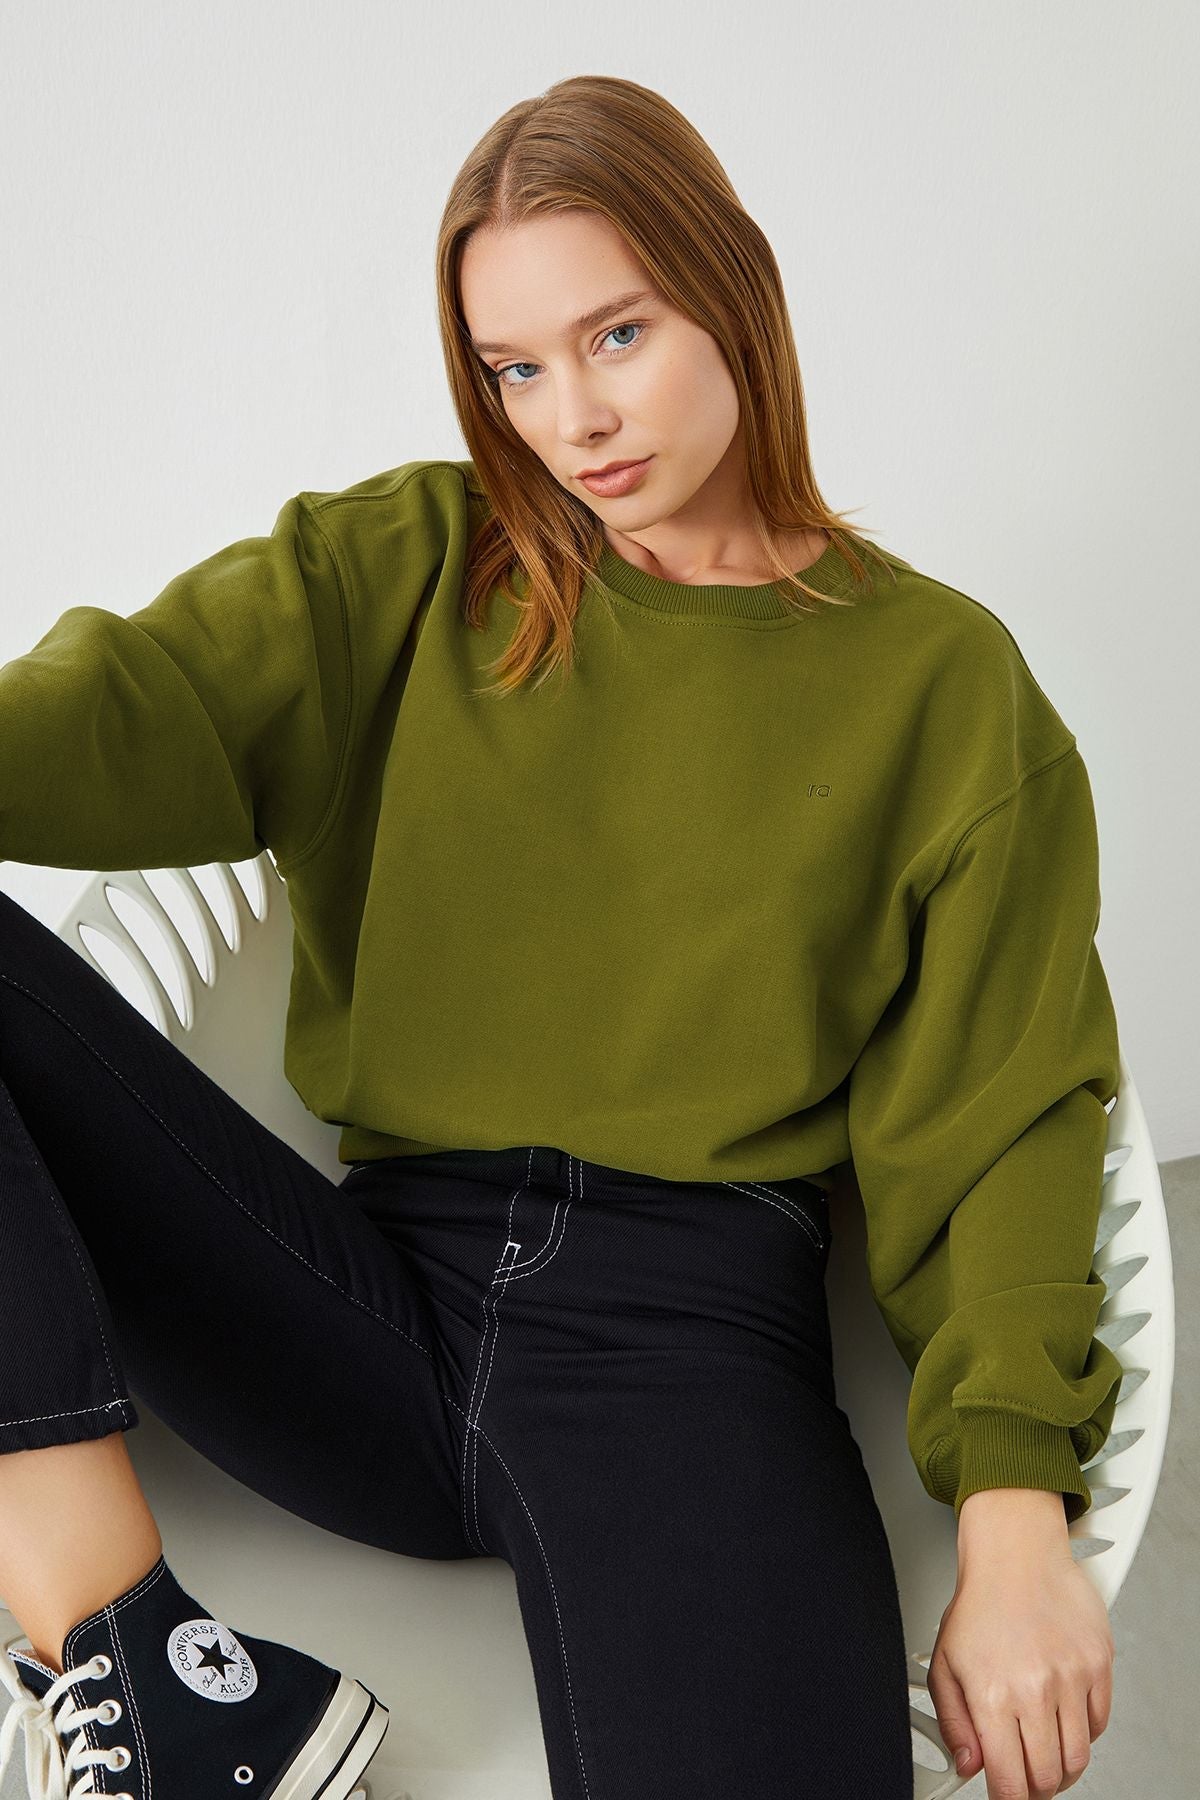 Stylish Woman in Green VITA Avocado Crop Sweatshirt - Fashionably Eco-Friendly